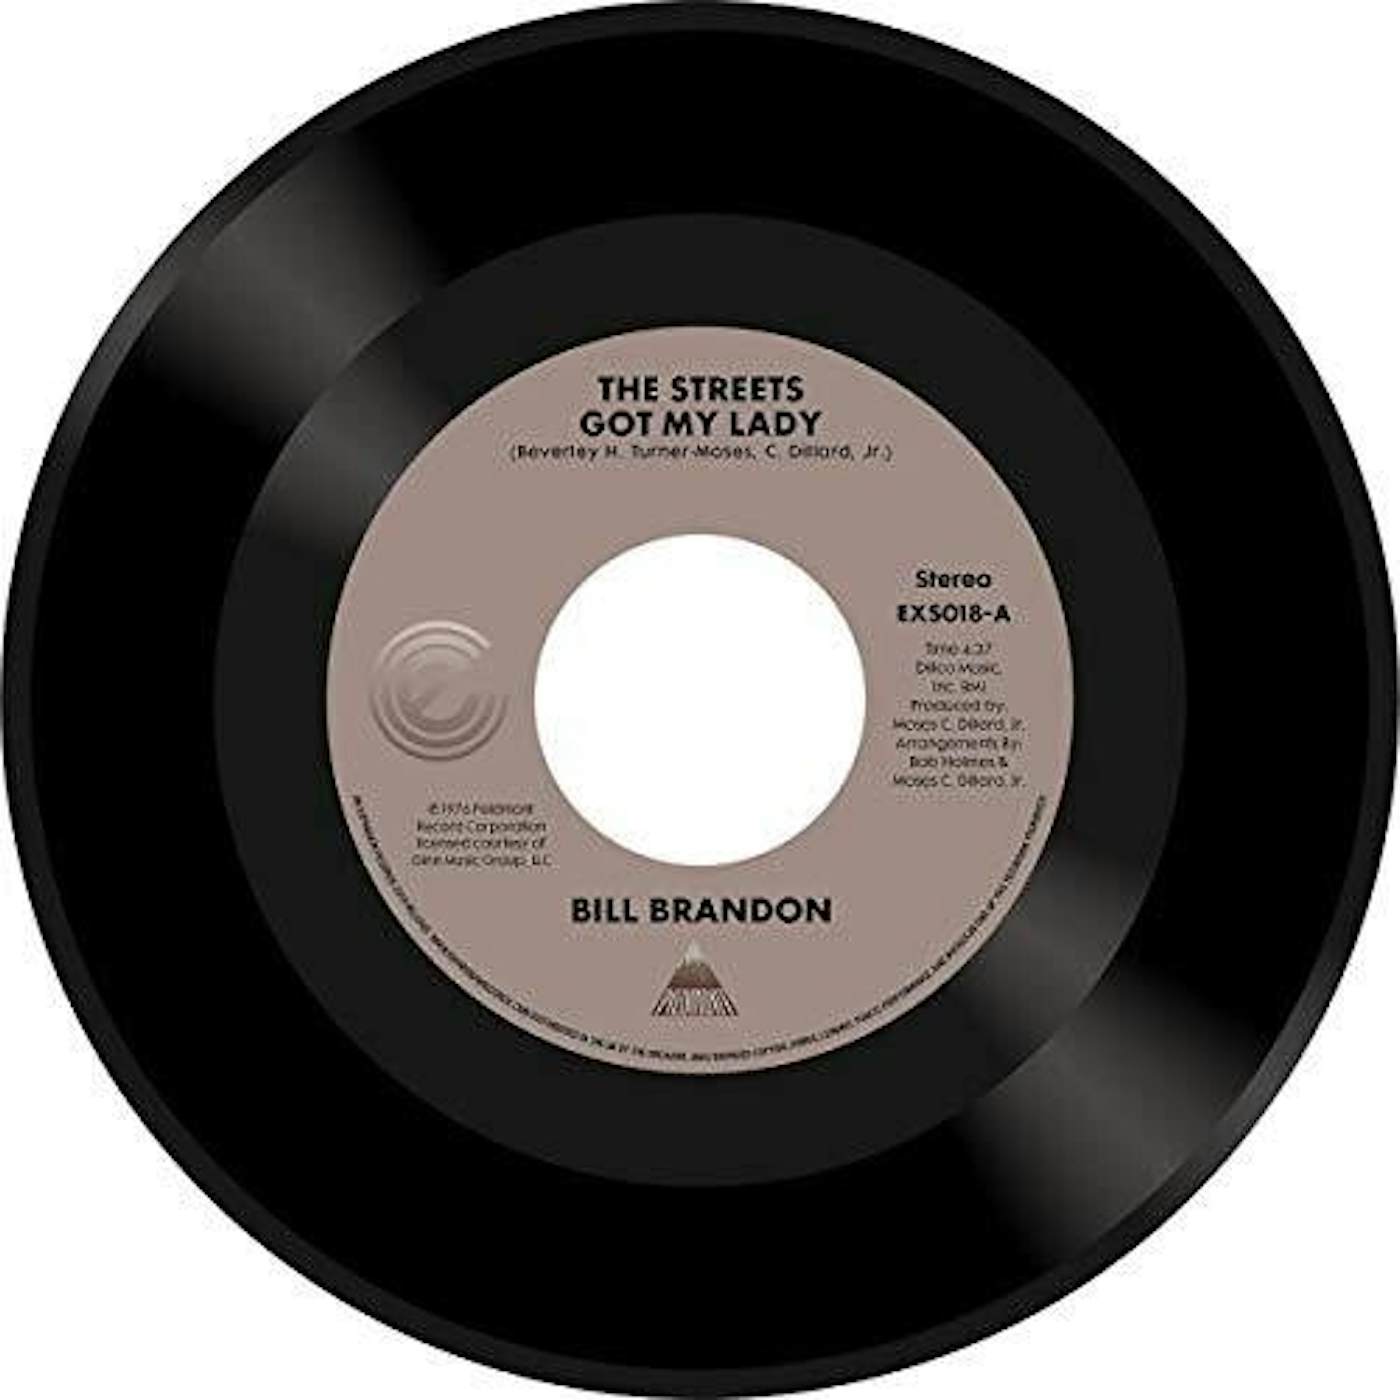 BILL BRANDON STREETS GOT MY LADY / WHATEVER I AM I'M YOURS Vinyl Record